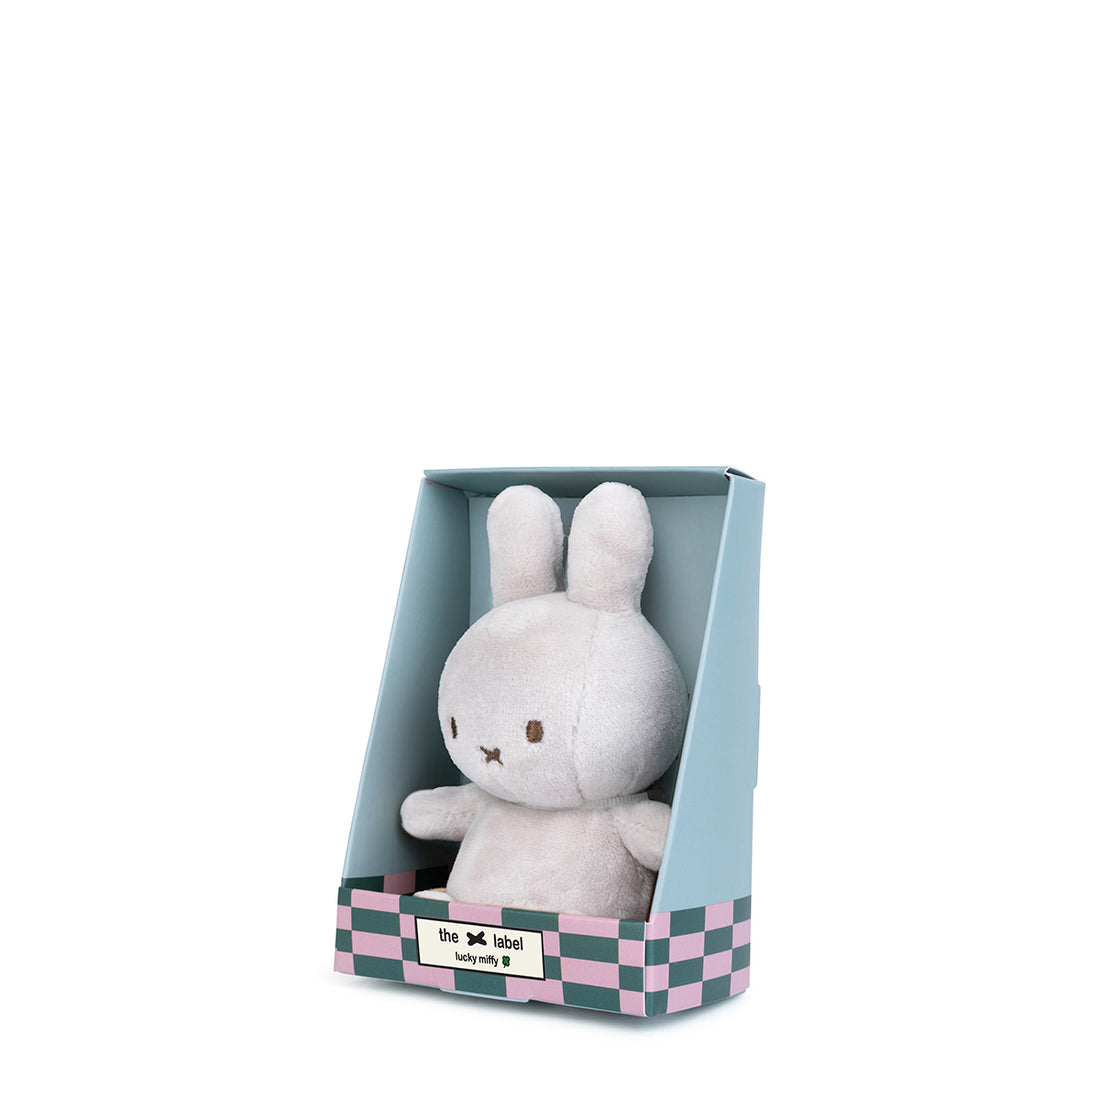 miffy-lucky-miffy-grey-in-giftbox-10cm-4-miff-24182557